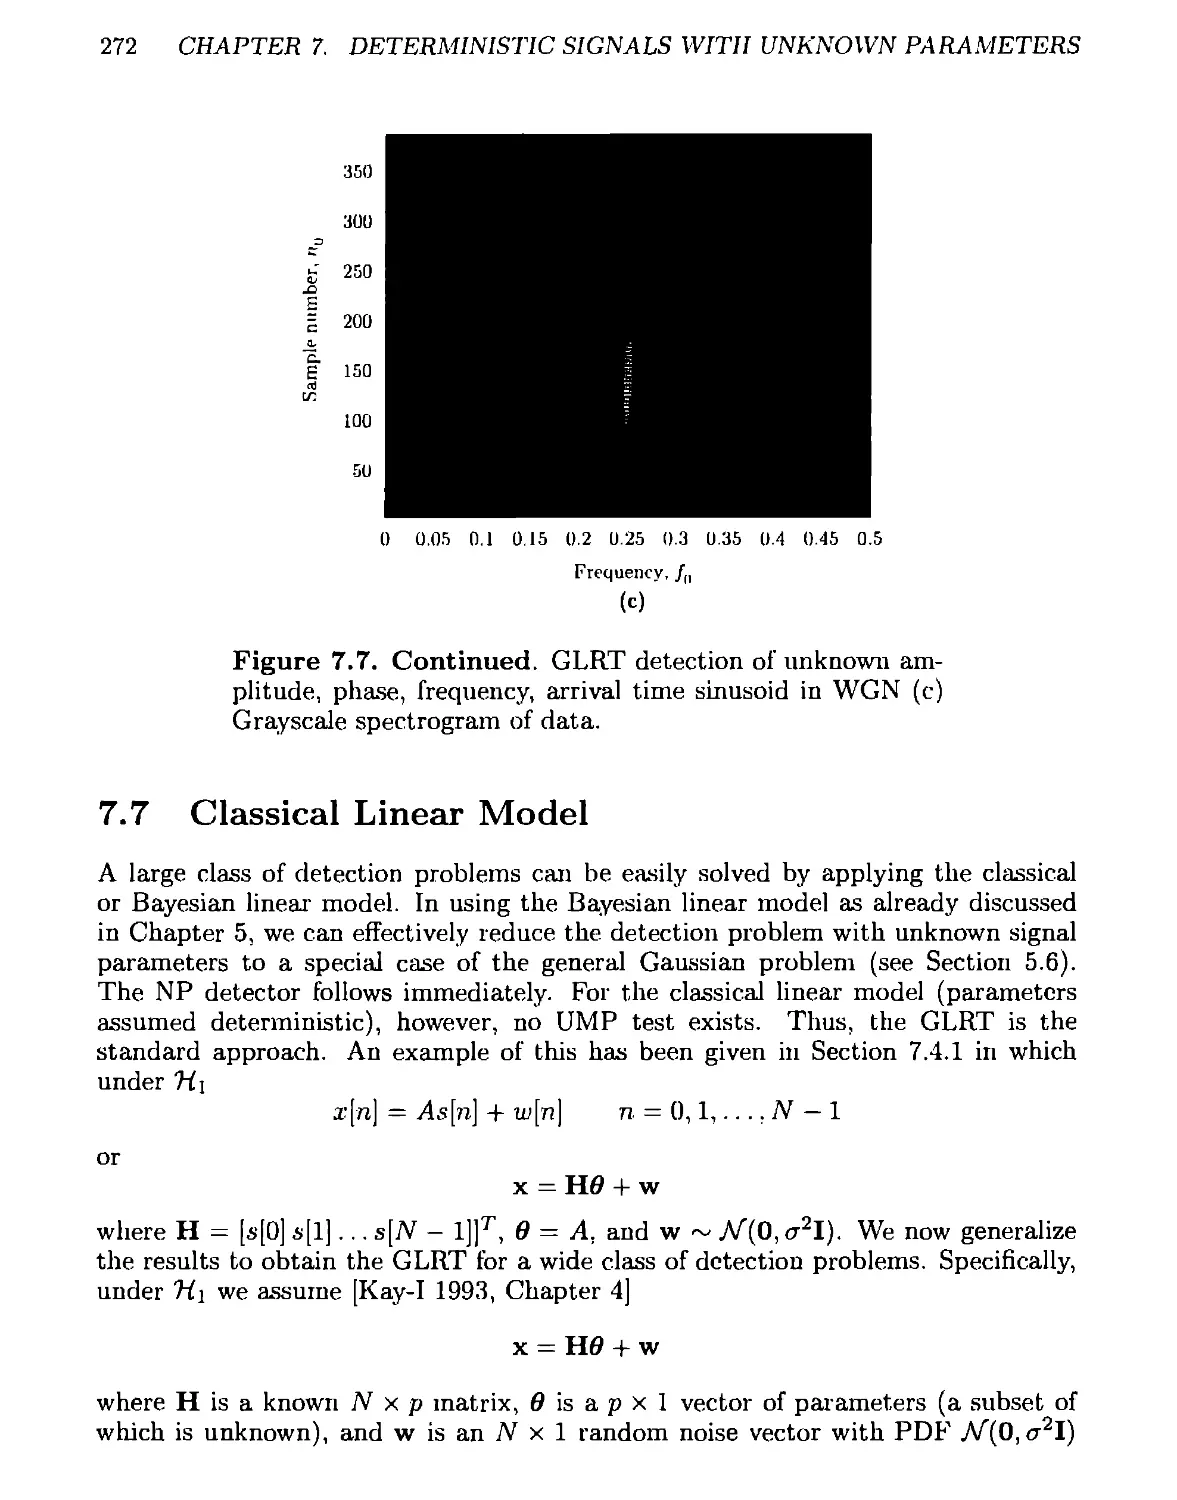 7.7 Classical Linear Model